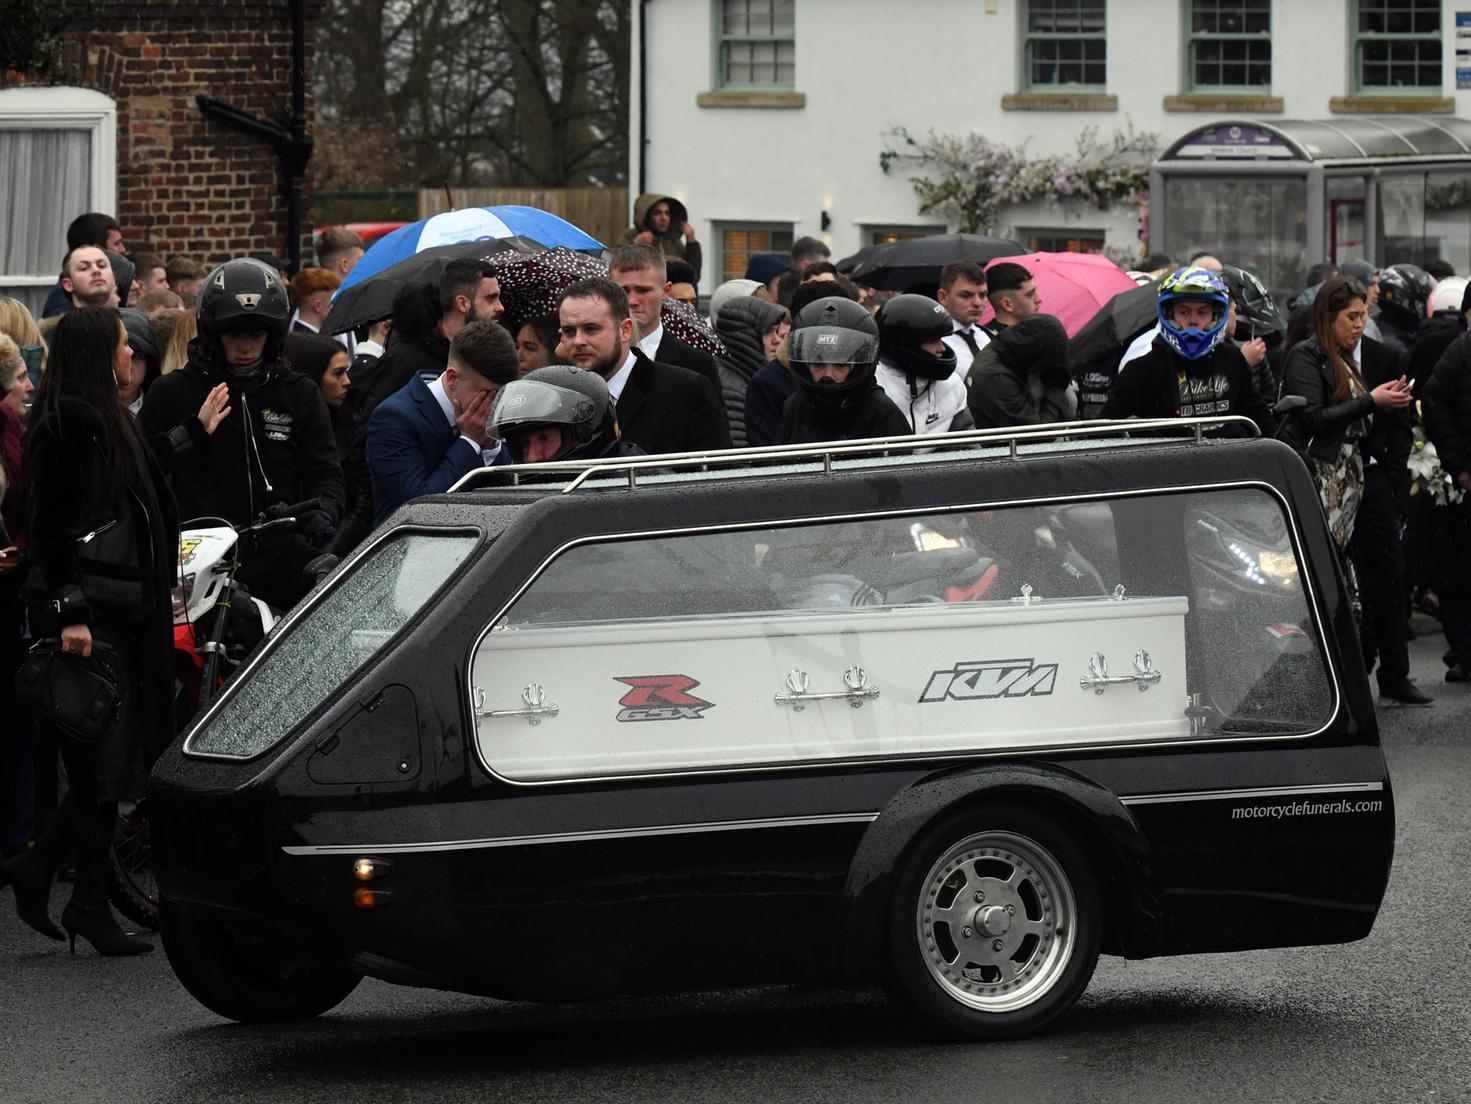 Luke's coffin in a motorcycle hearse.